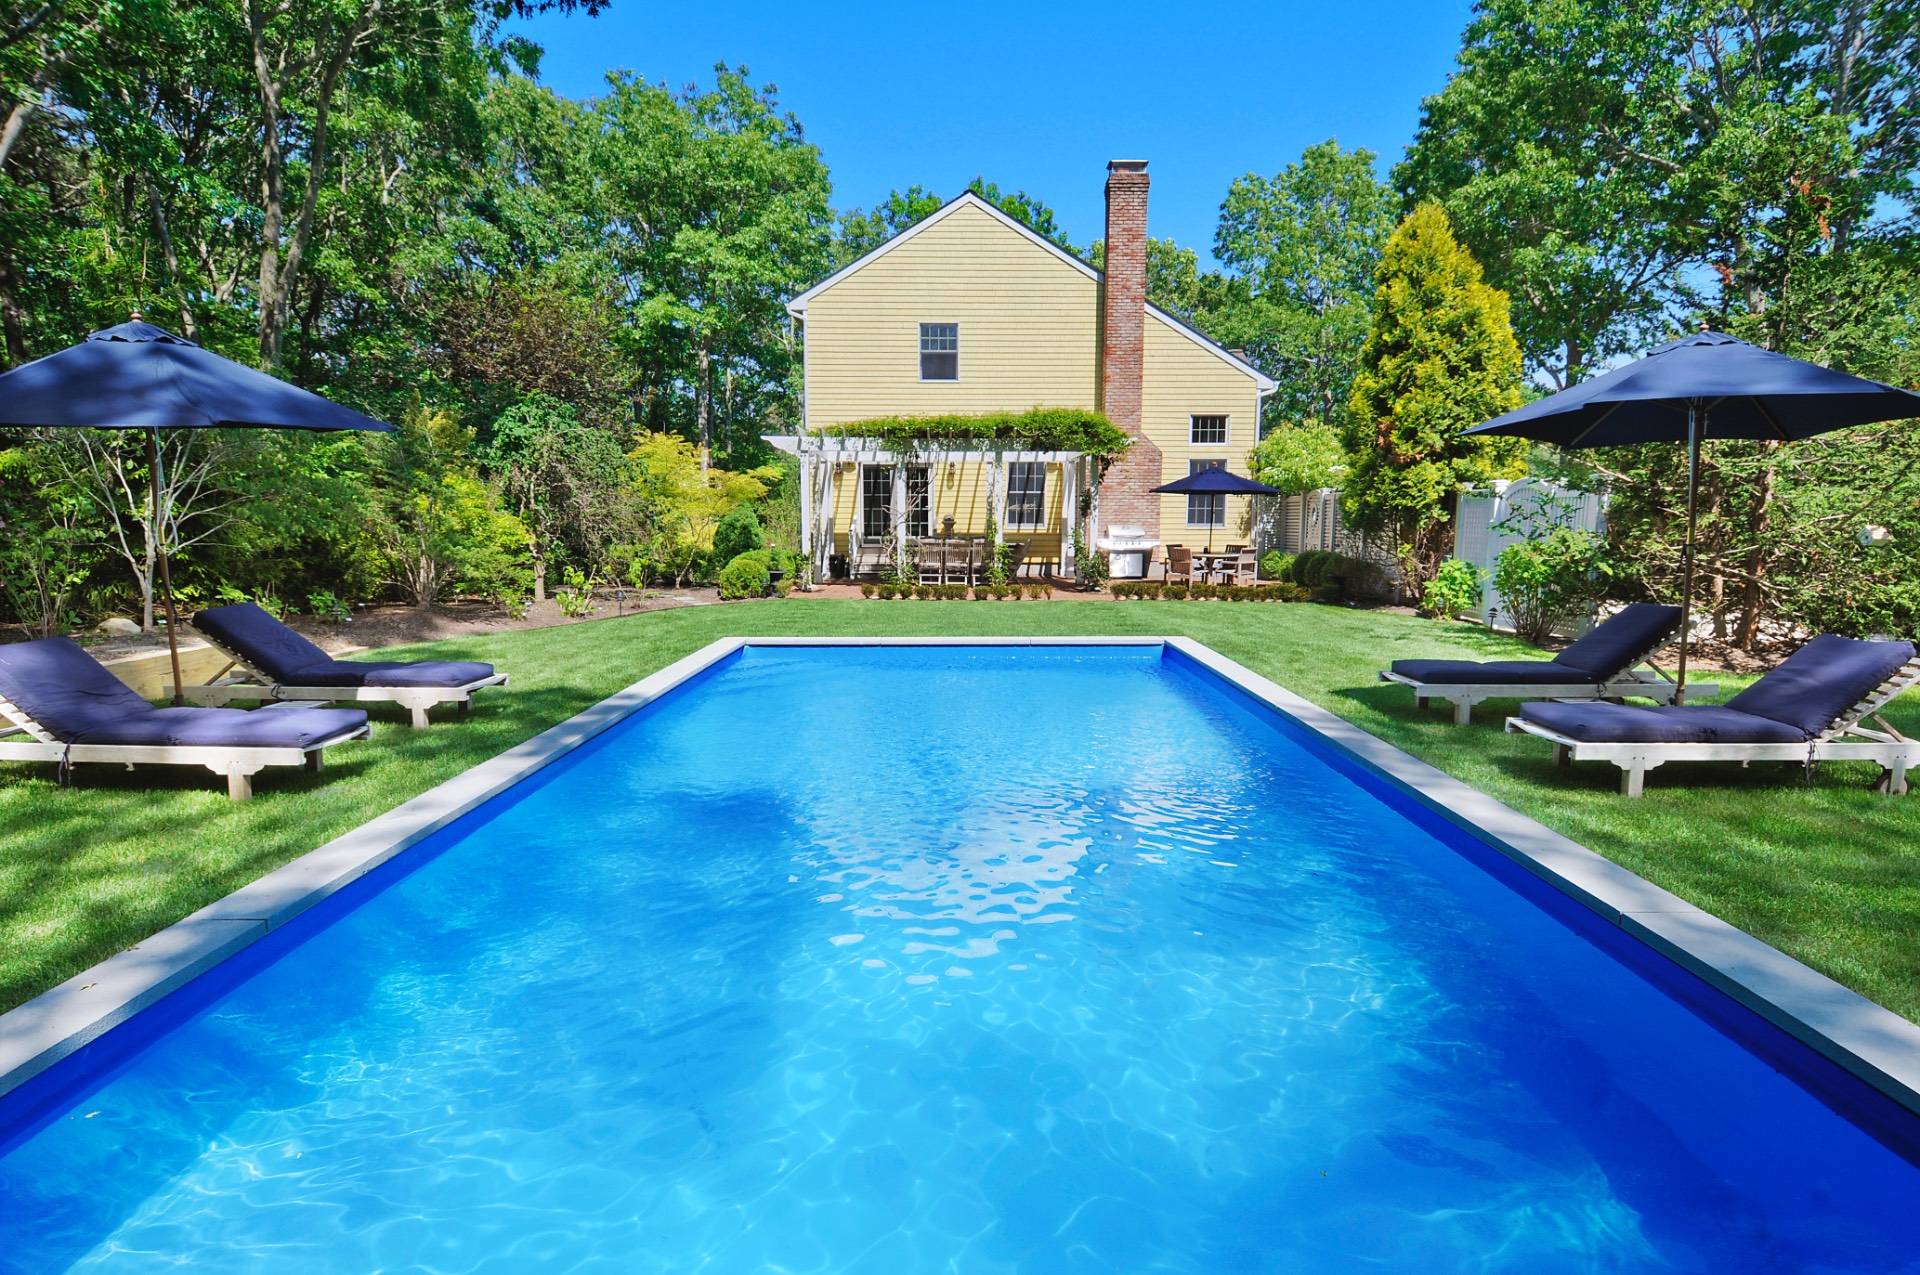 Rental Property at East Hampton, East Hampton, Hamptons, NY - Bedrooms: 5 
Bathrooms: 4.5  - $35,000 MO.